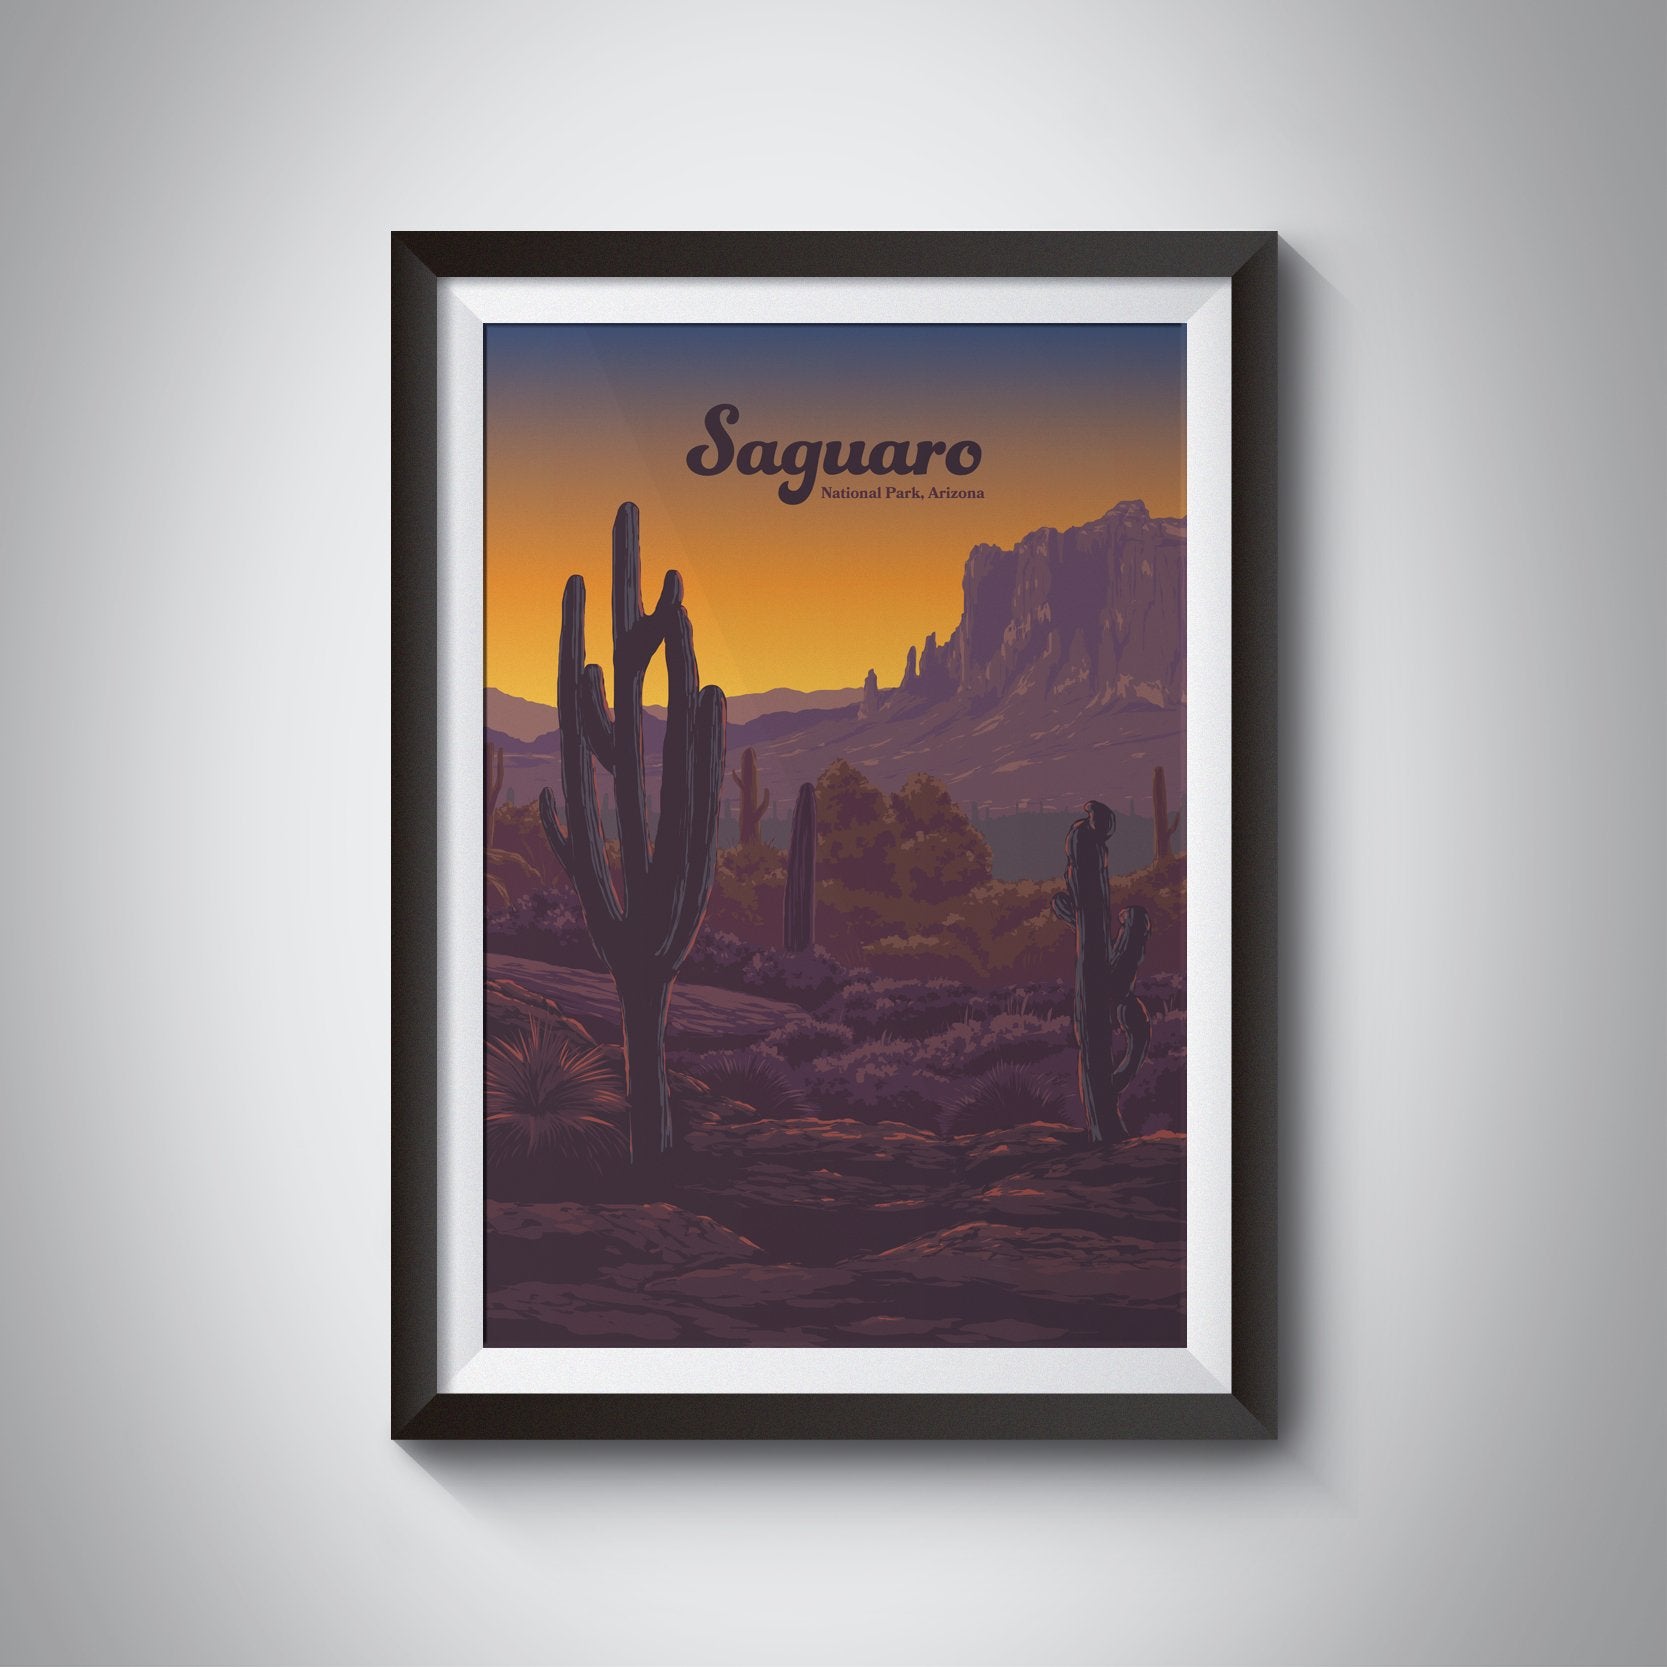 Saguaro National Park Travel Poster